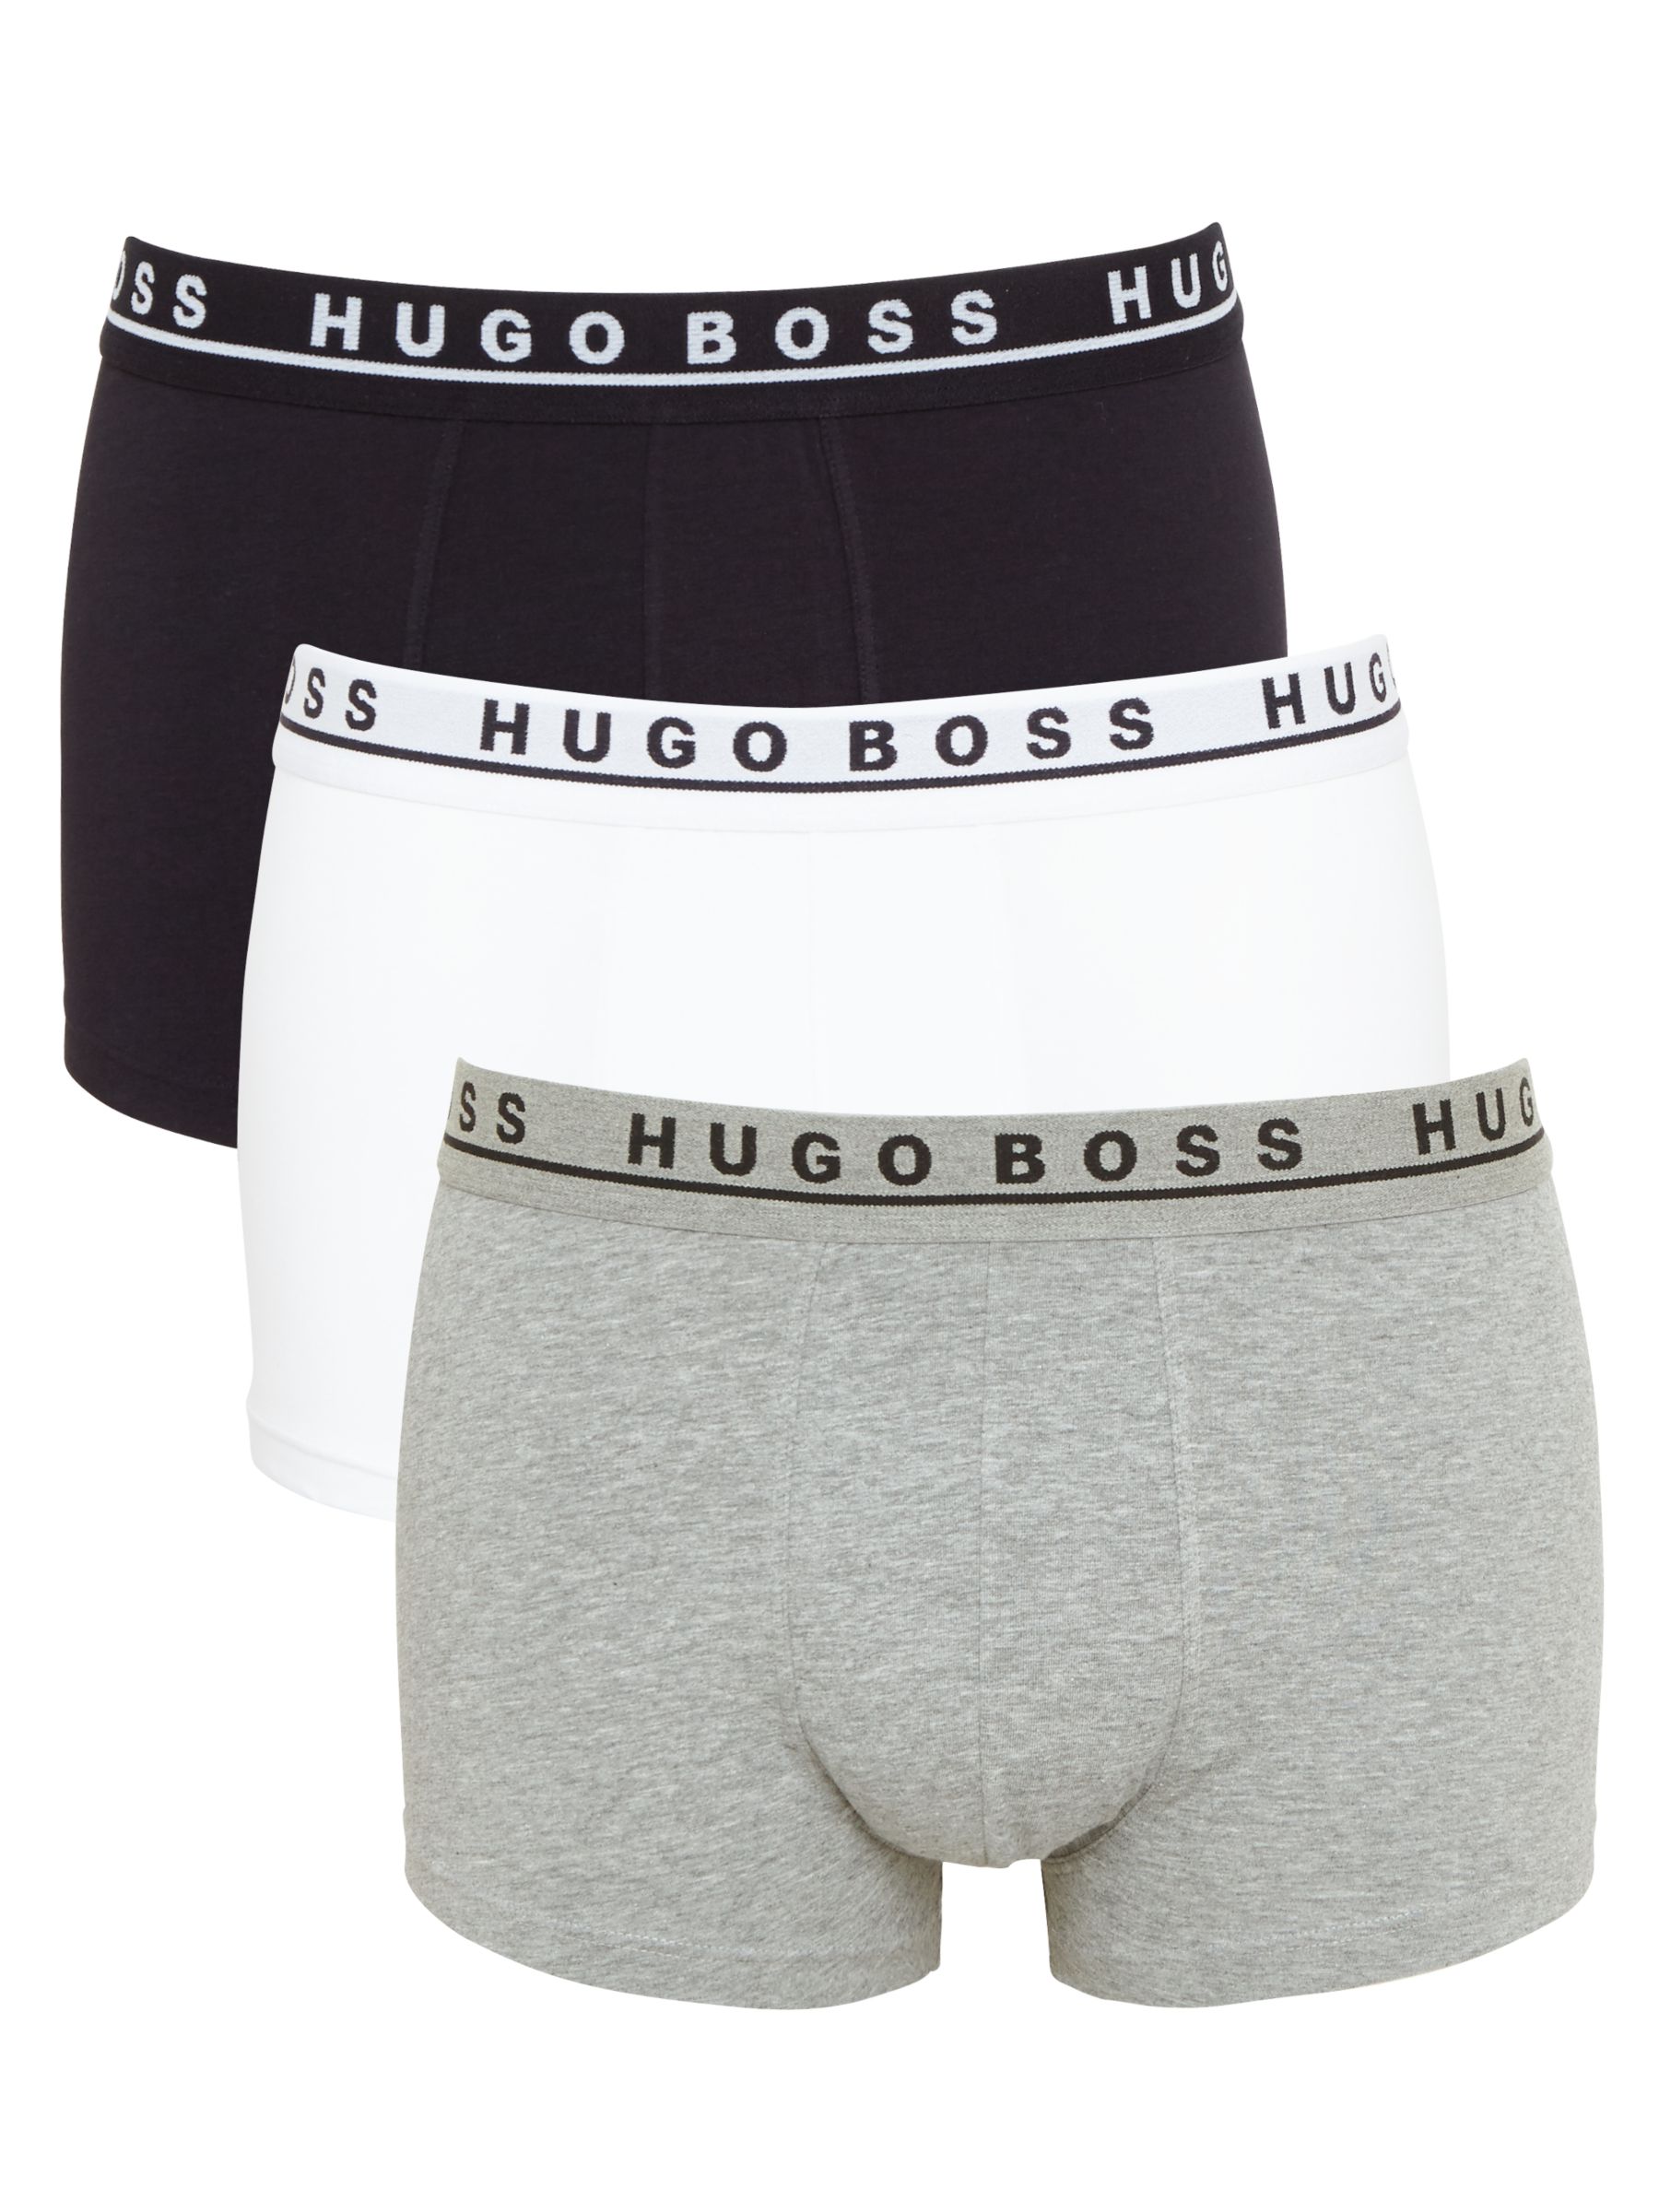 hugo boss underwear uk, OFF 73%,Buy!